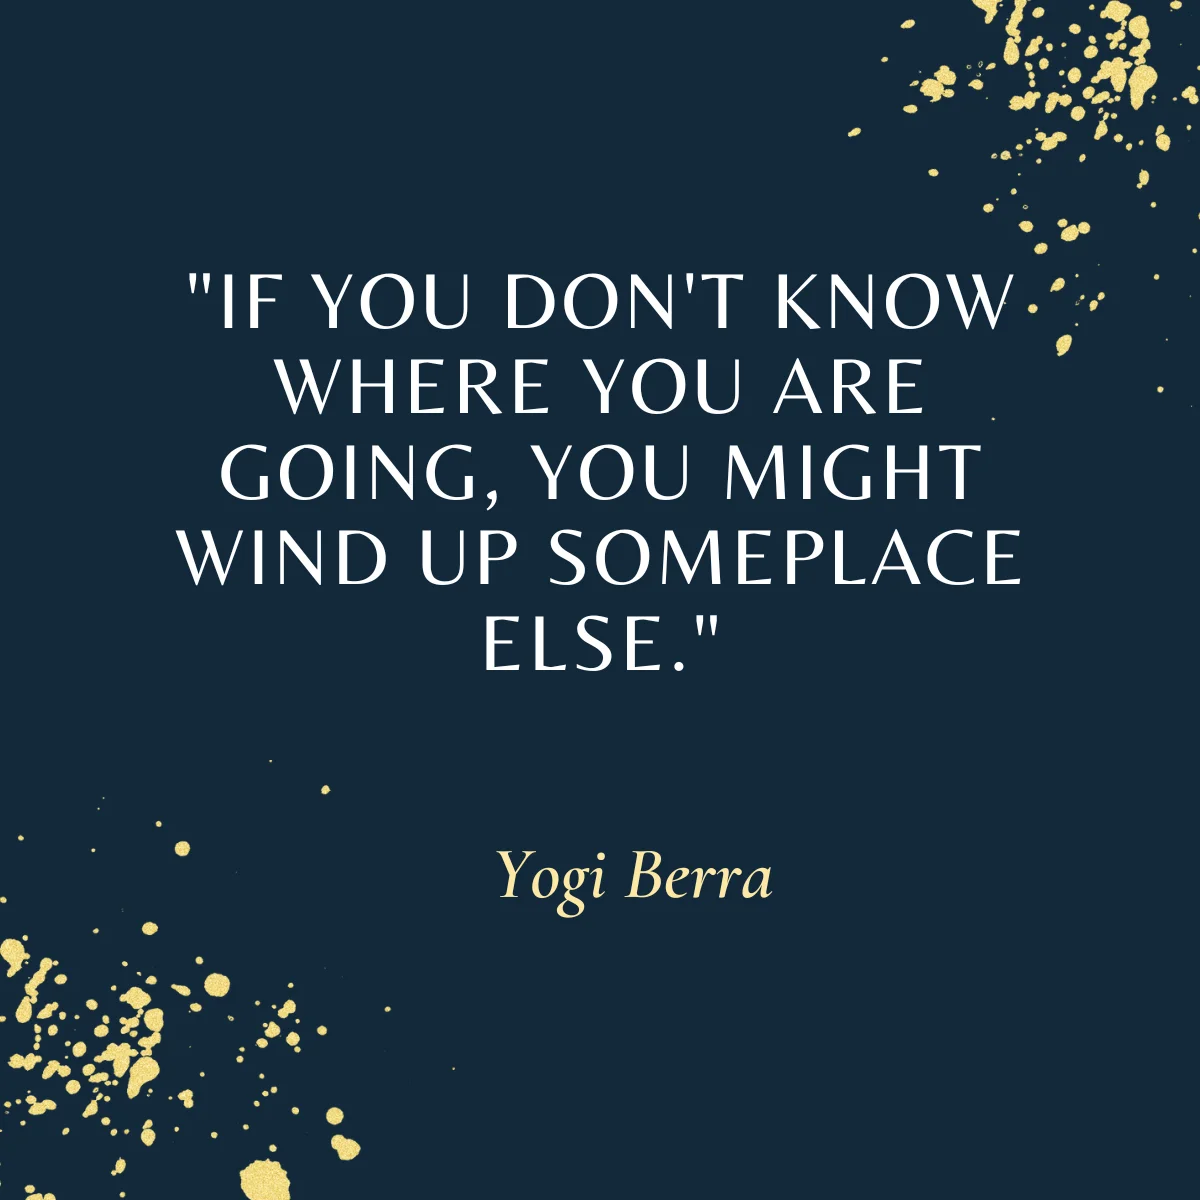 A quote by Yogi Berra